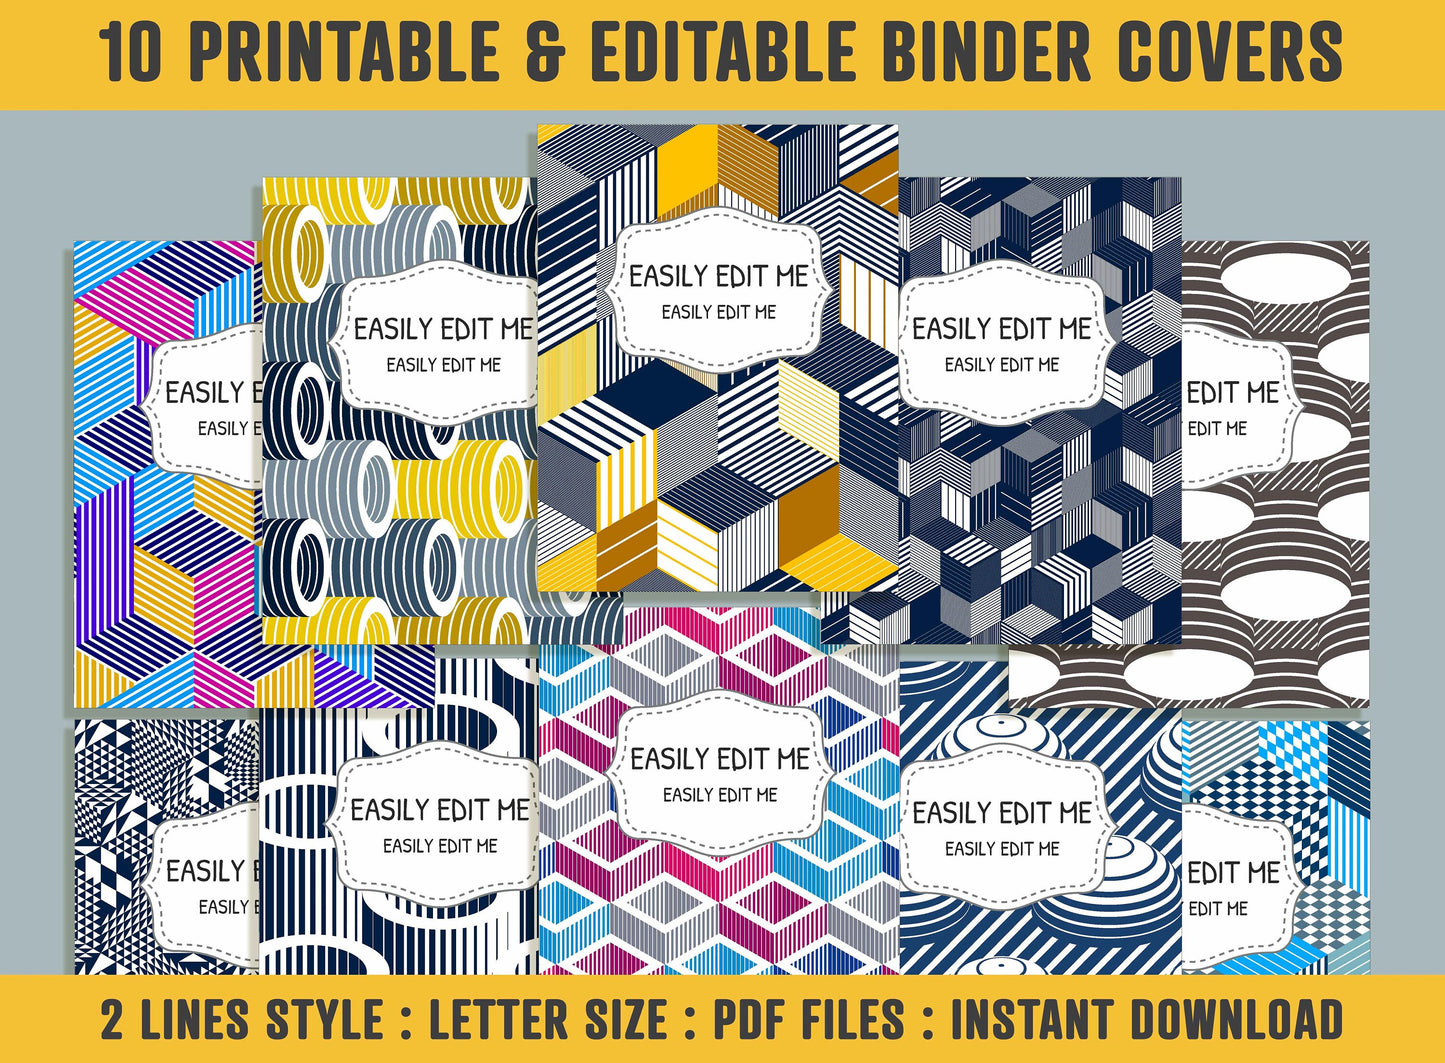 Geometric 3D Binder Cover, 10 Printable/Editable Binder Covers+Spines, Architecture/Box Planner Template, Teacher/School Binder Label/Insert